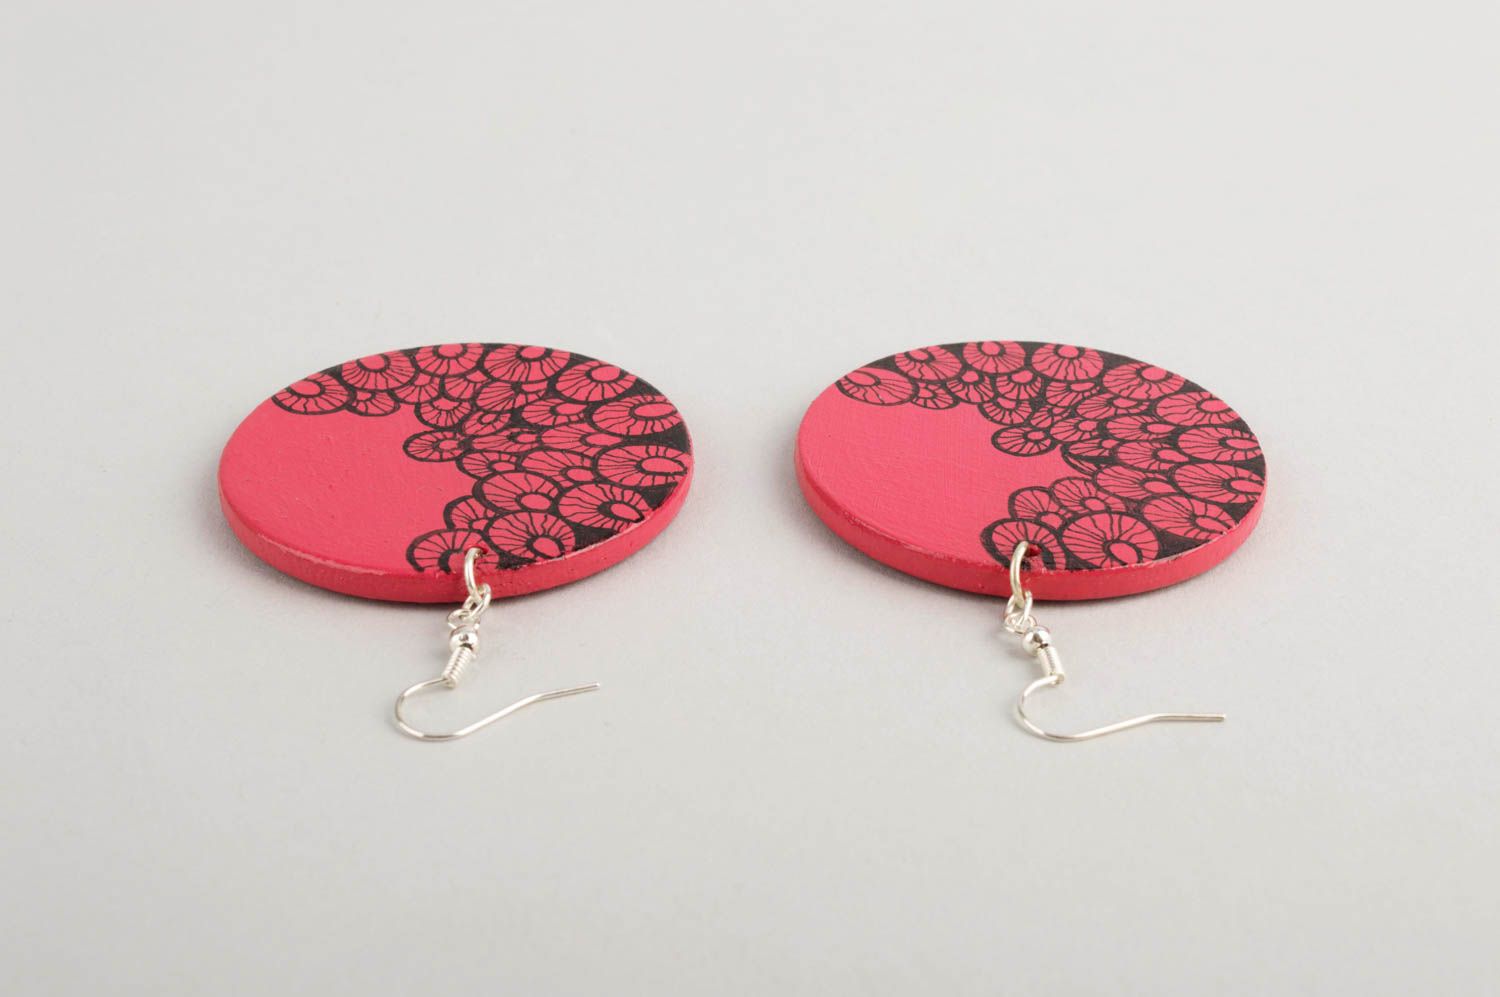 Ladies earrings handmade earrings wooden jewelry fashion accessories gift ideas photo 5